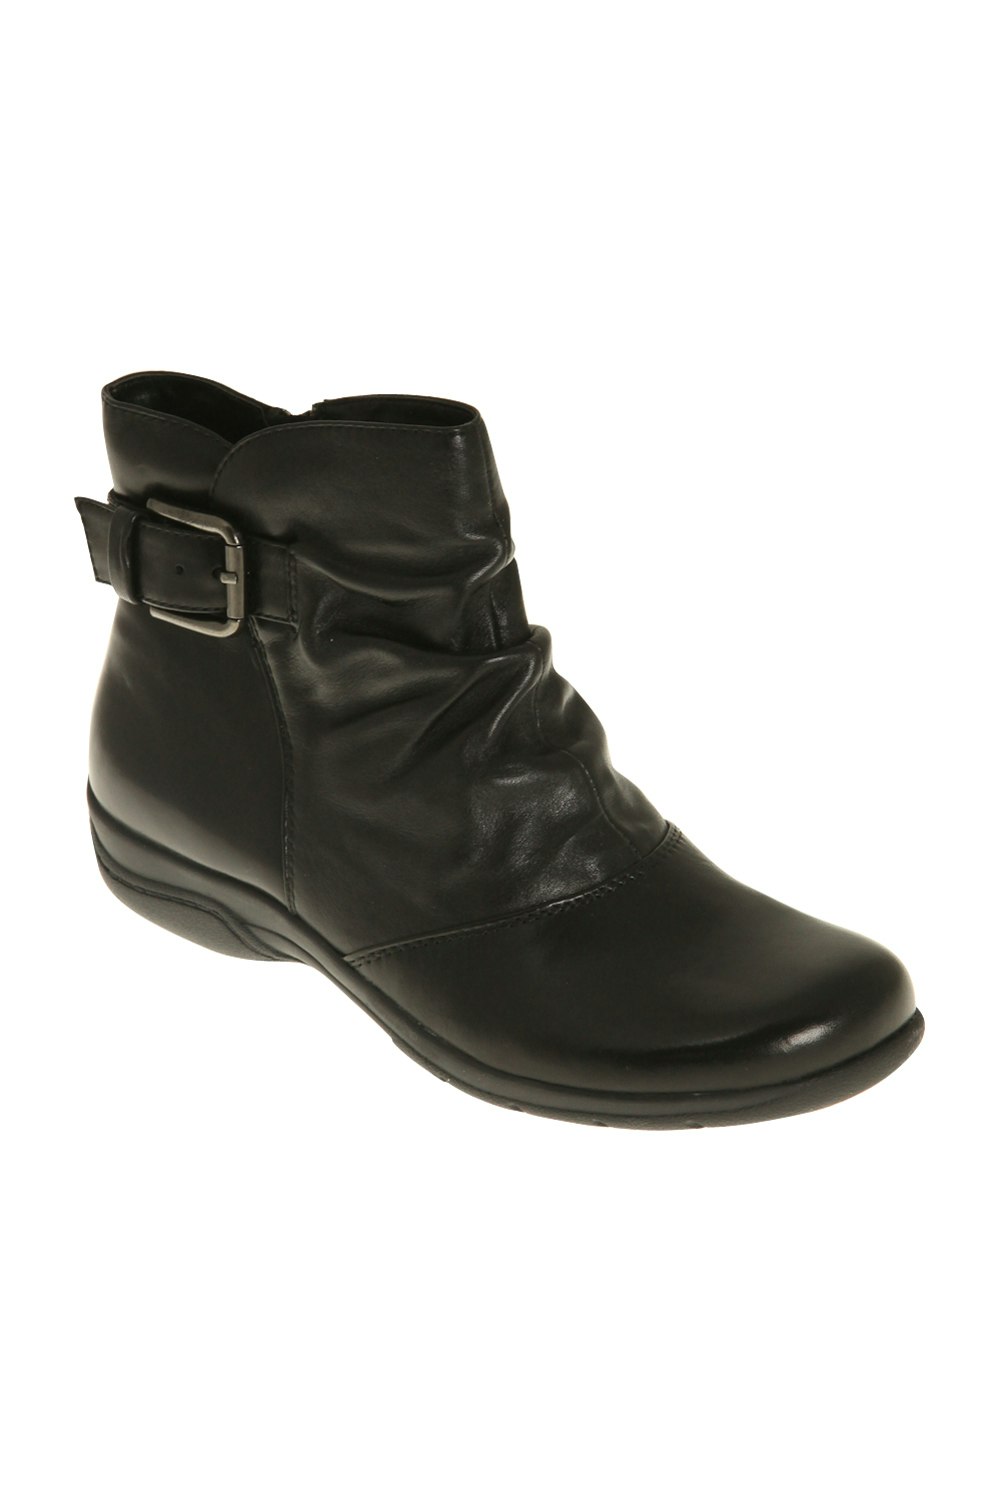 Planet Shoes Storm Boot - Womens Boots - Birdsnest Online Fashion Store